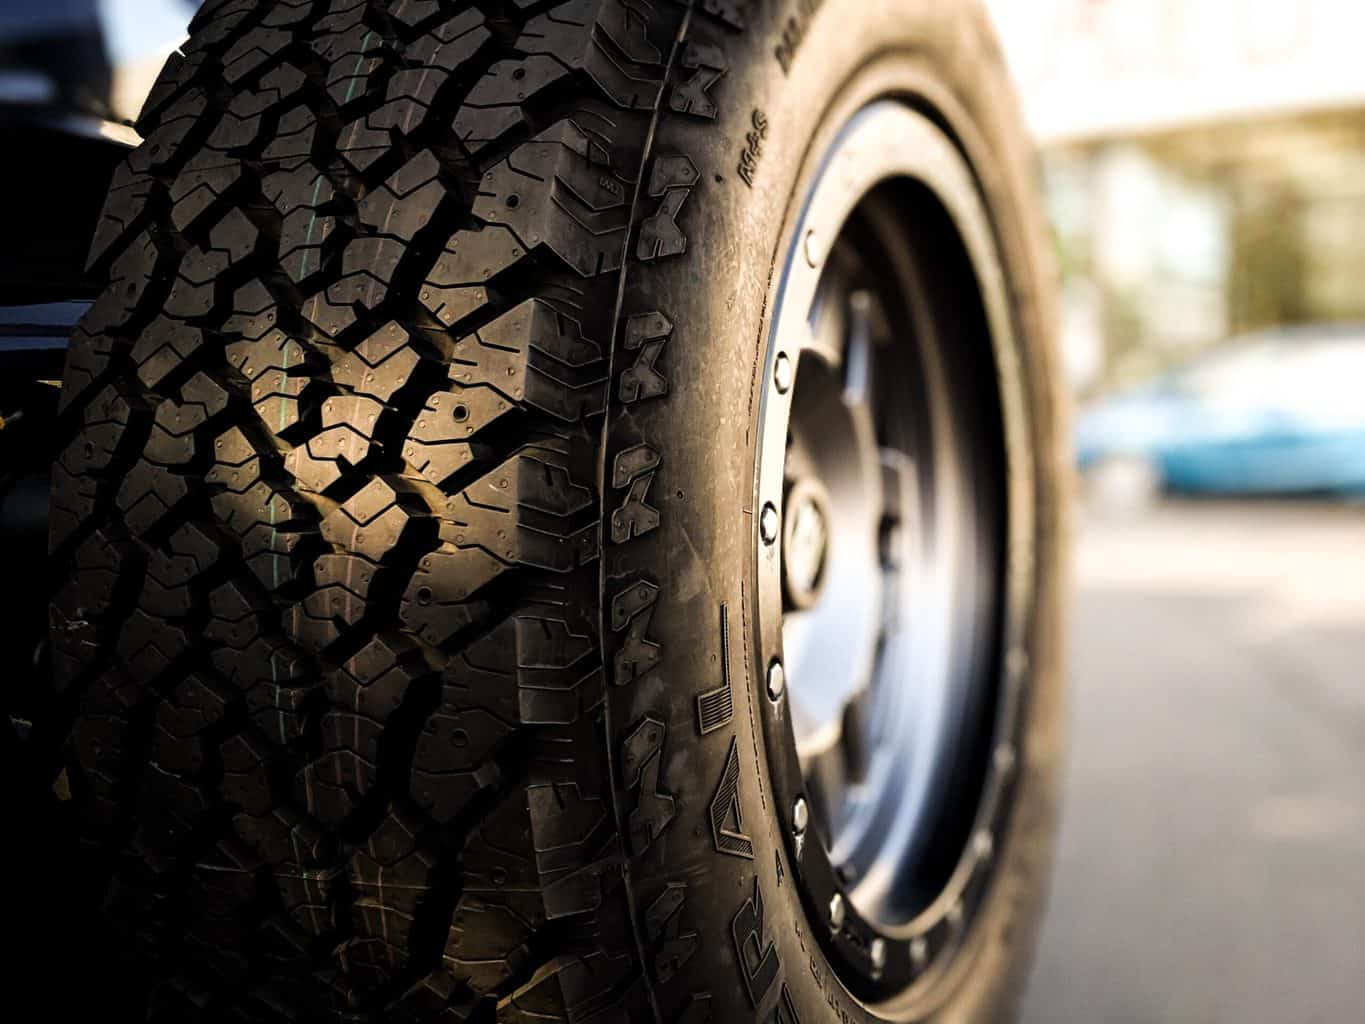 A close up shot of a black tire